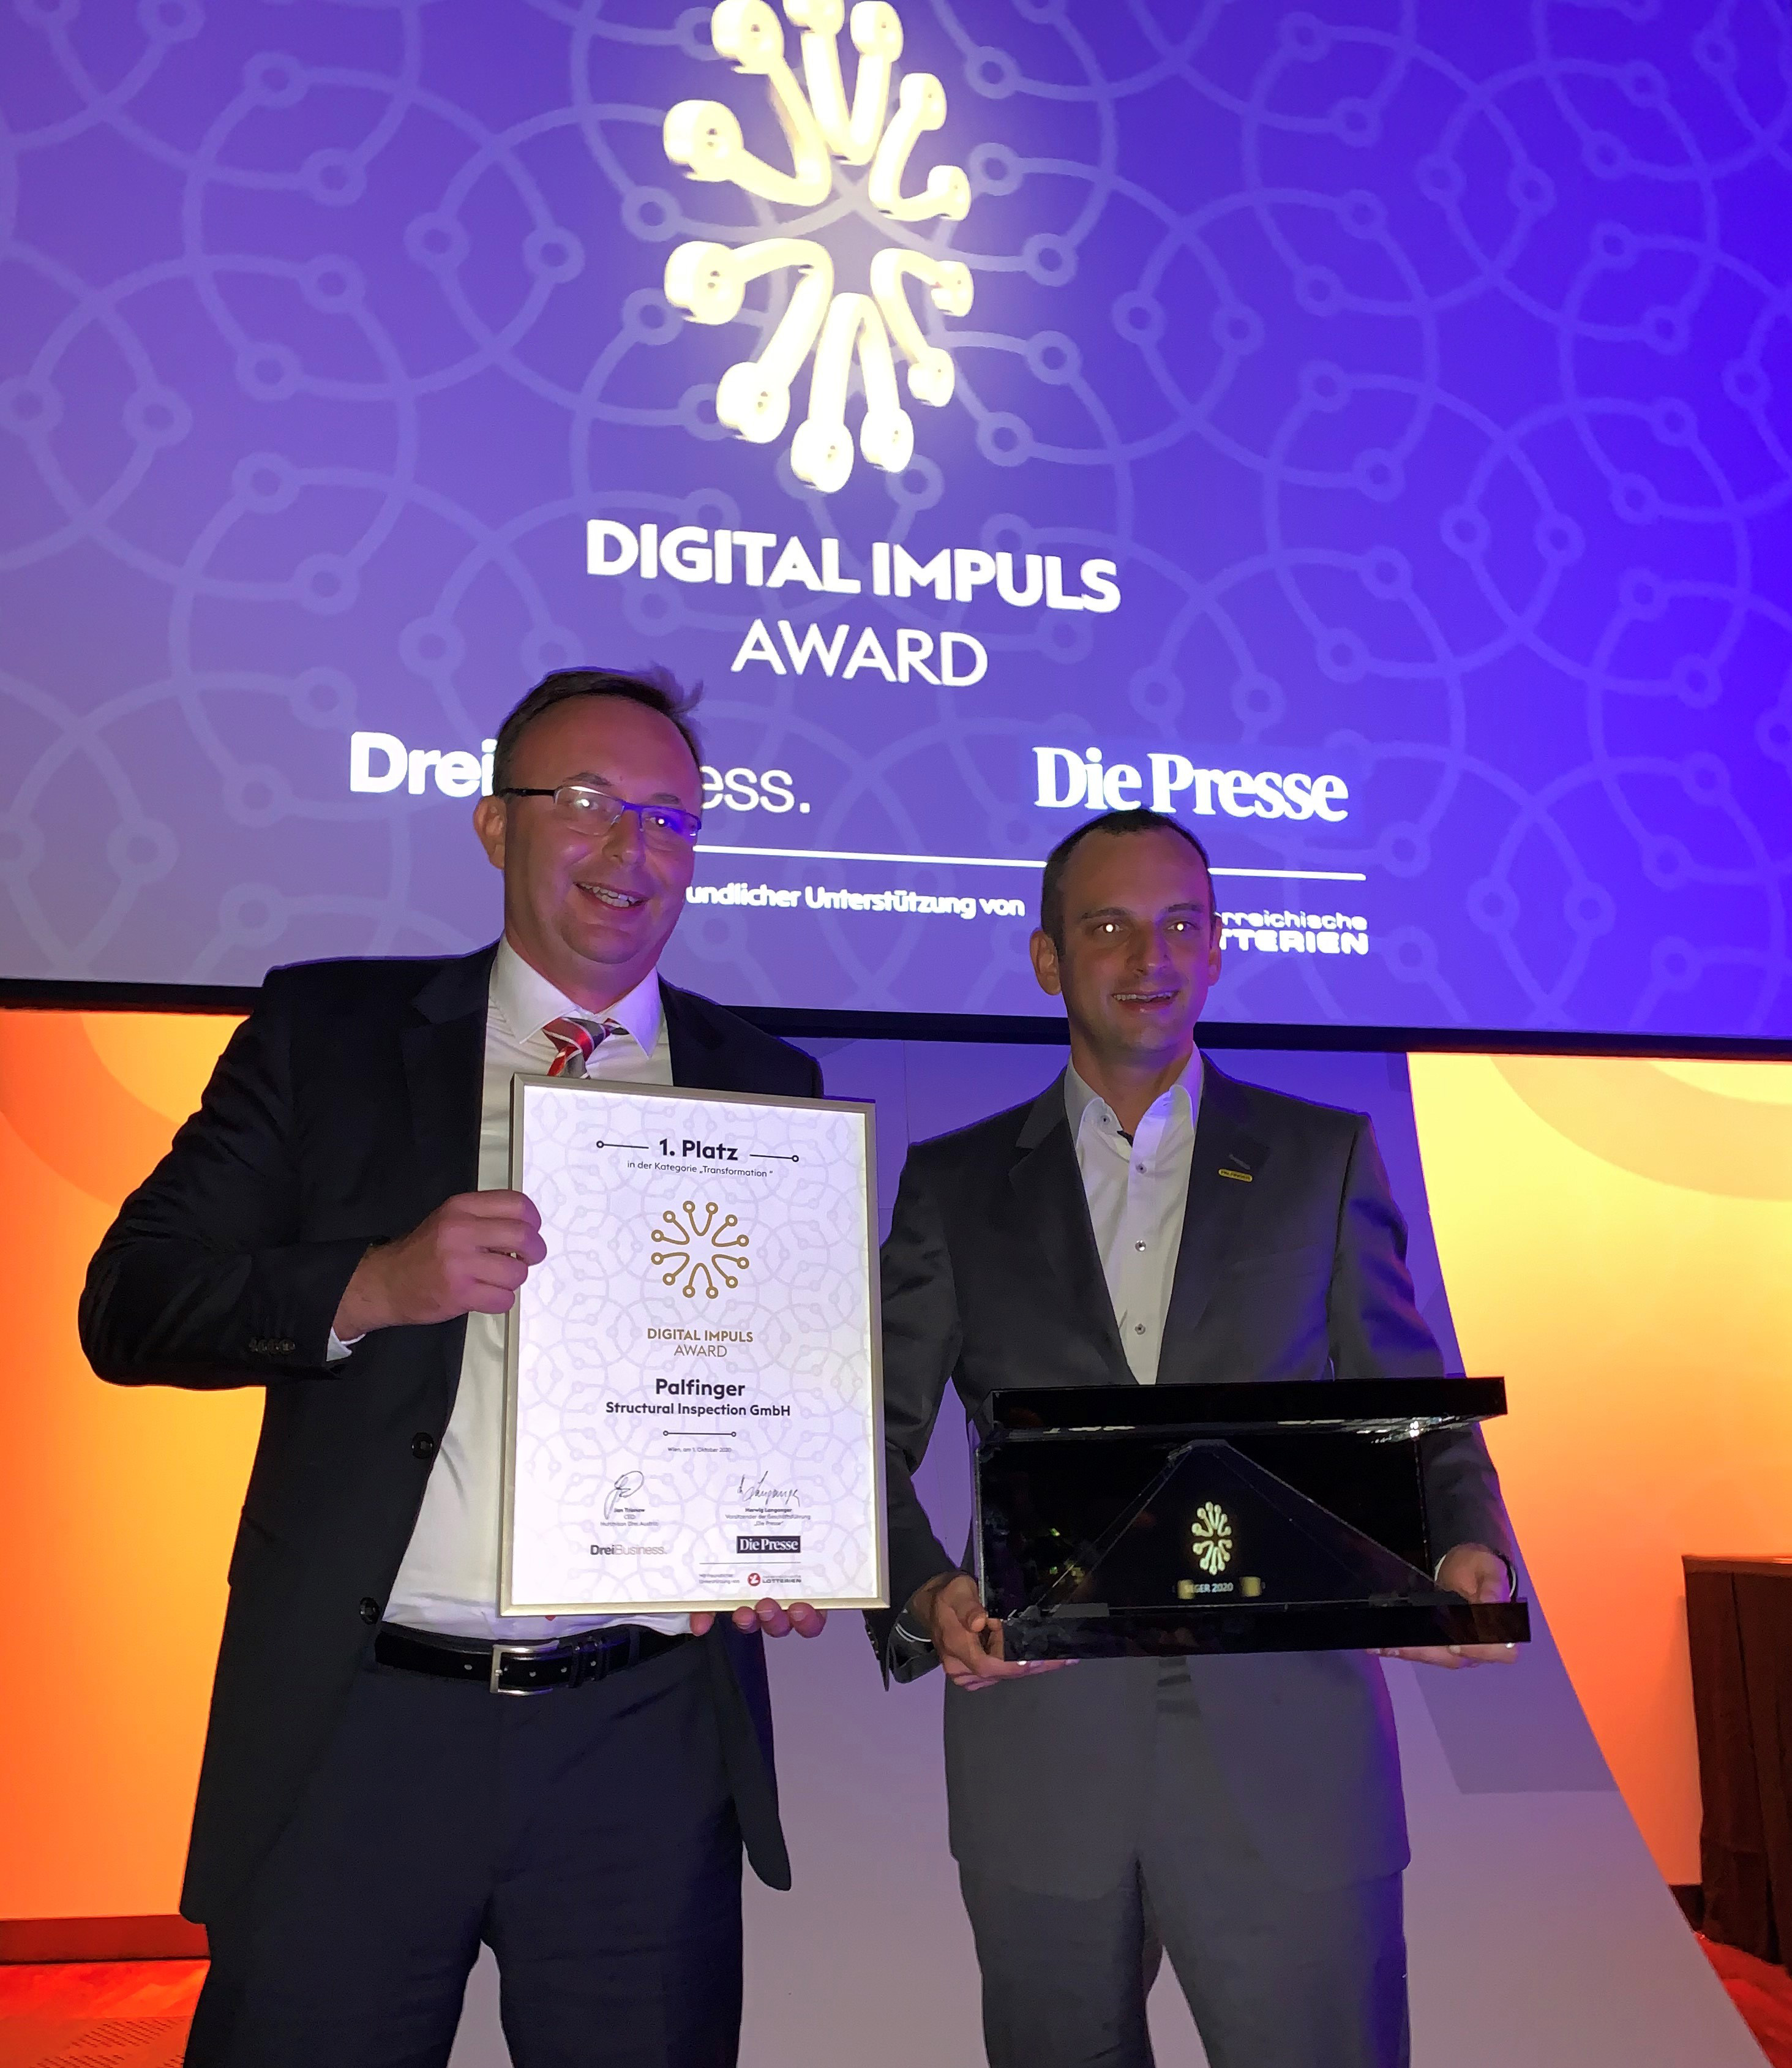 [company] in Graz Digital Impusl Award